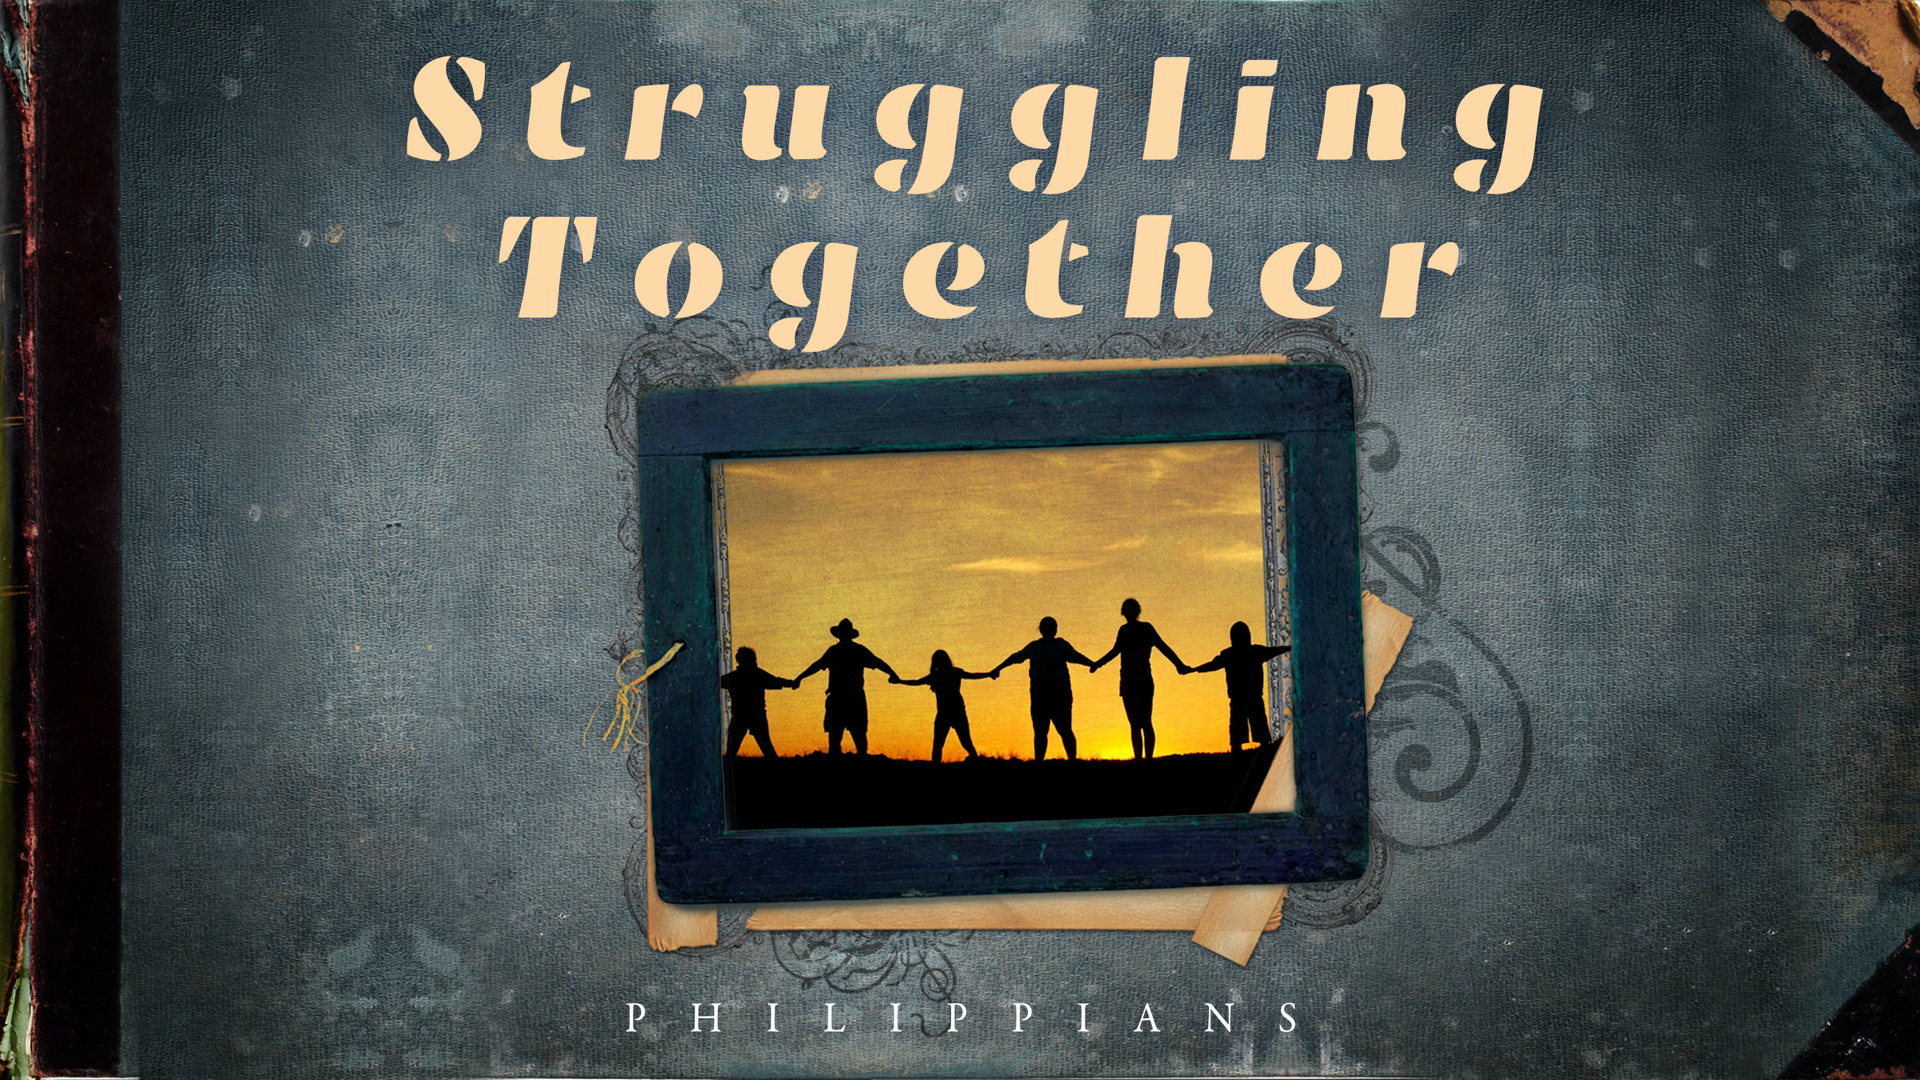 0 - 21.9.12p - Philippians - Struggling Together - Title.png